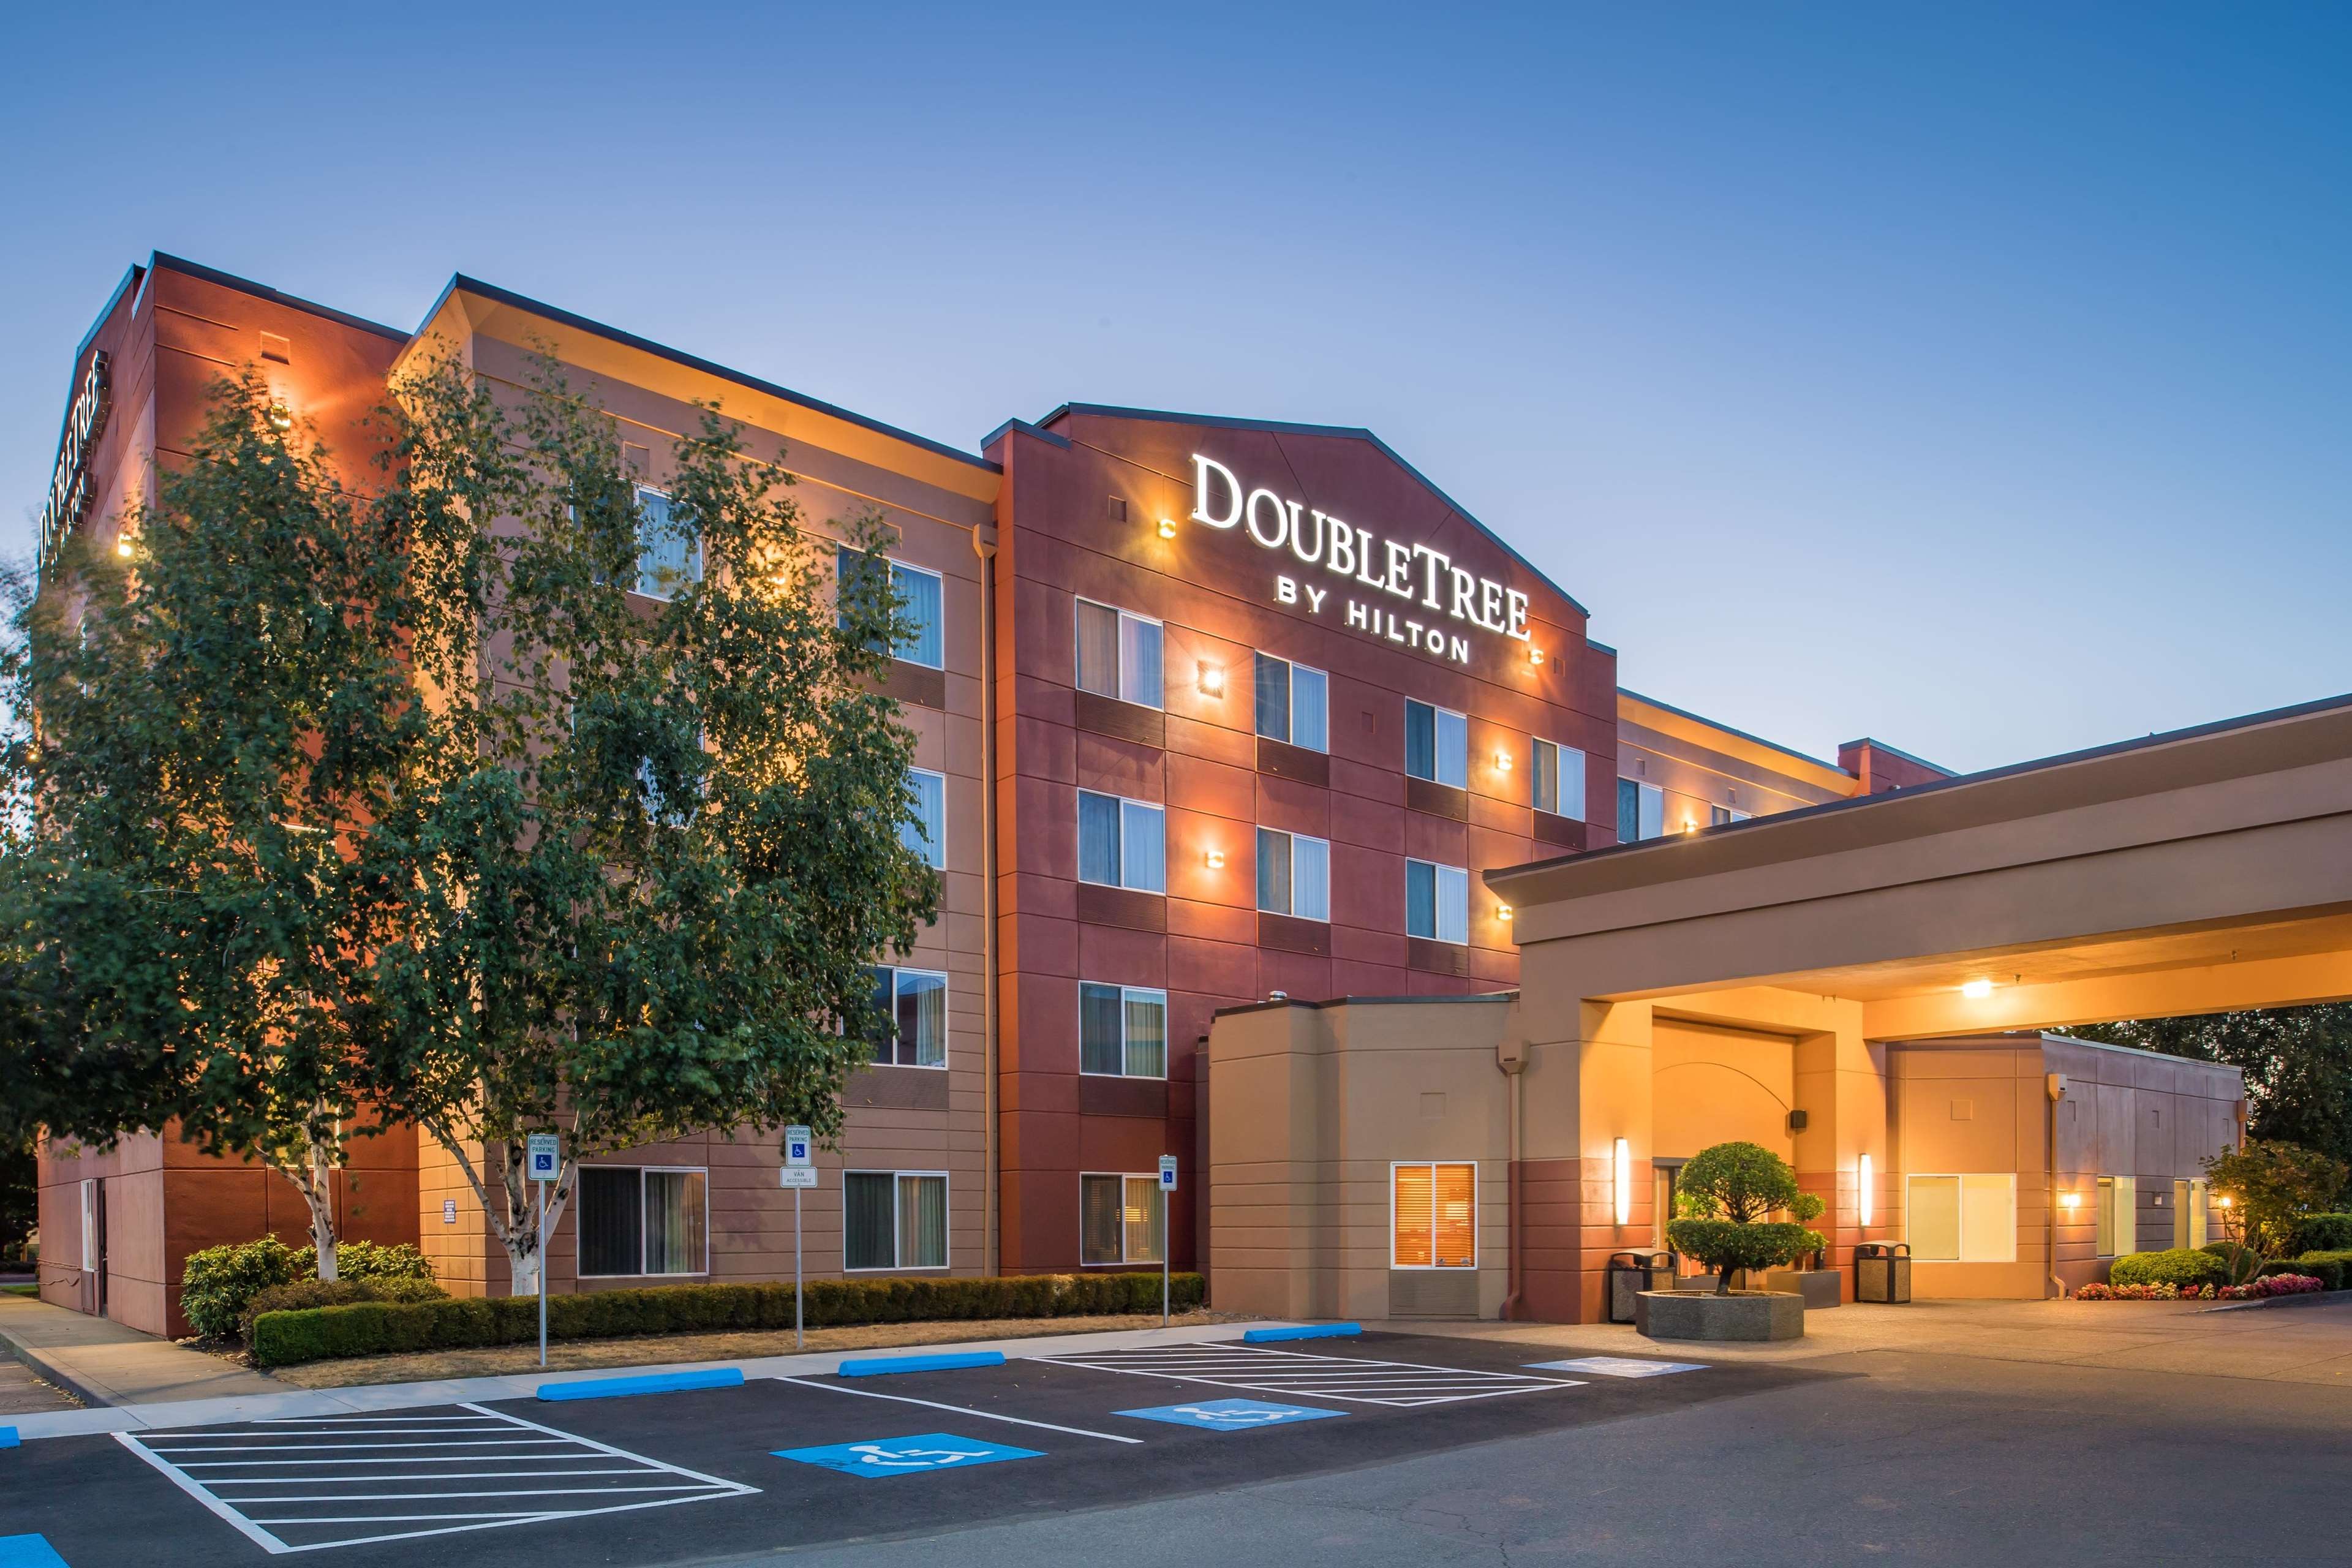 DoubleTree by Hilton Hotel Salem, Oregon Coupons Salem OR near me | 8coupons